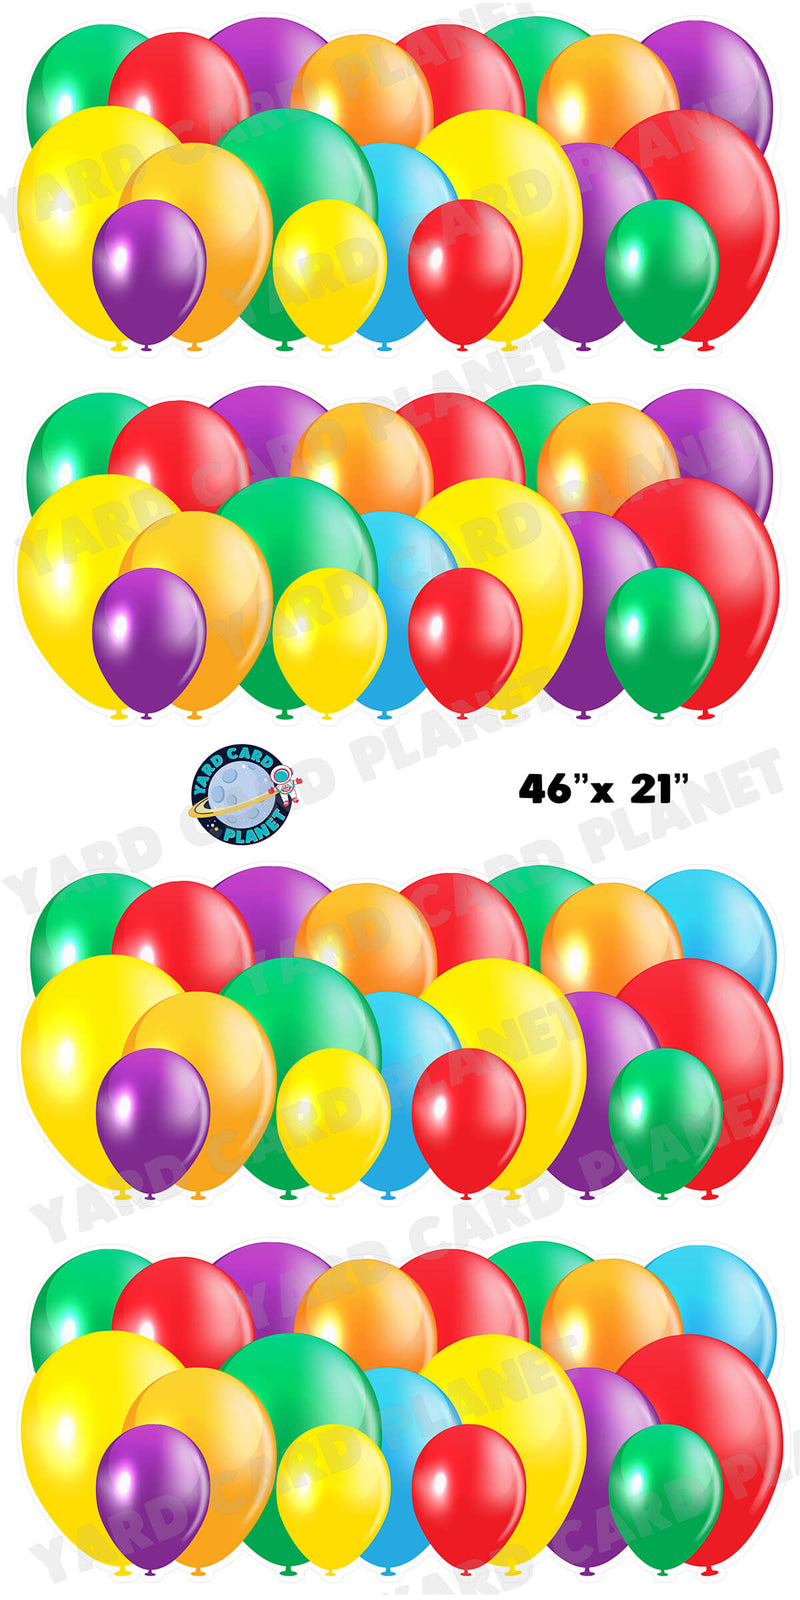 Color Wheel Balloon Panels Yard Card Set